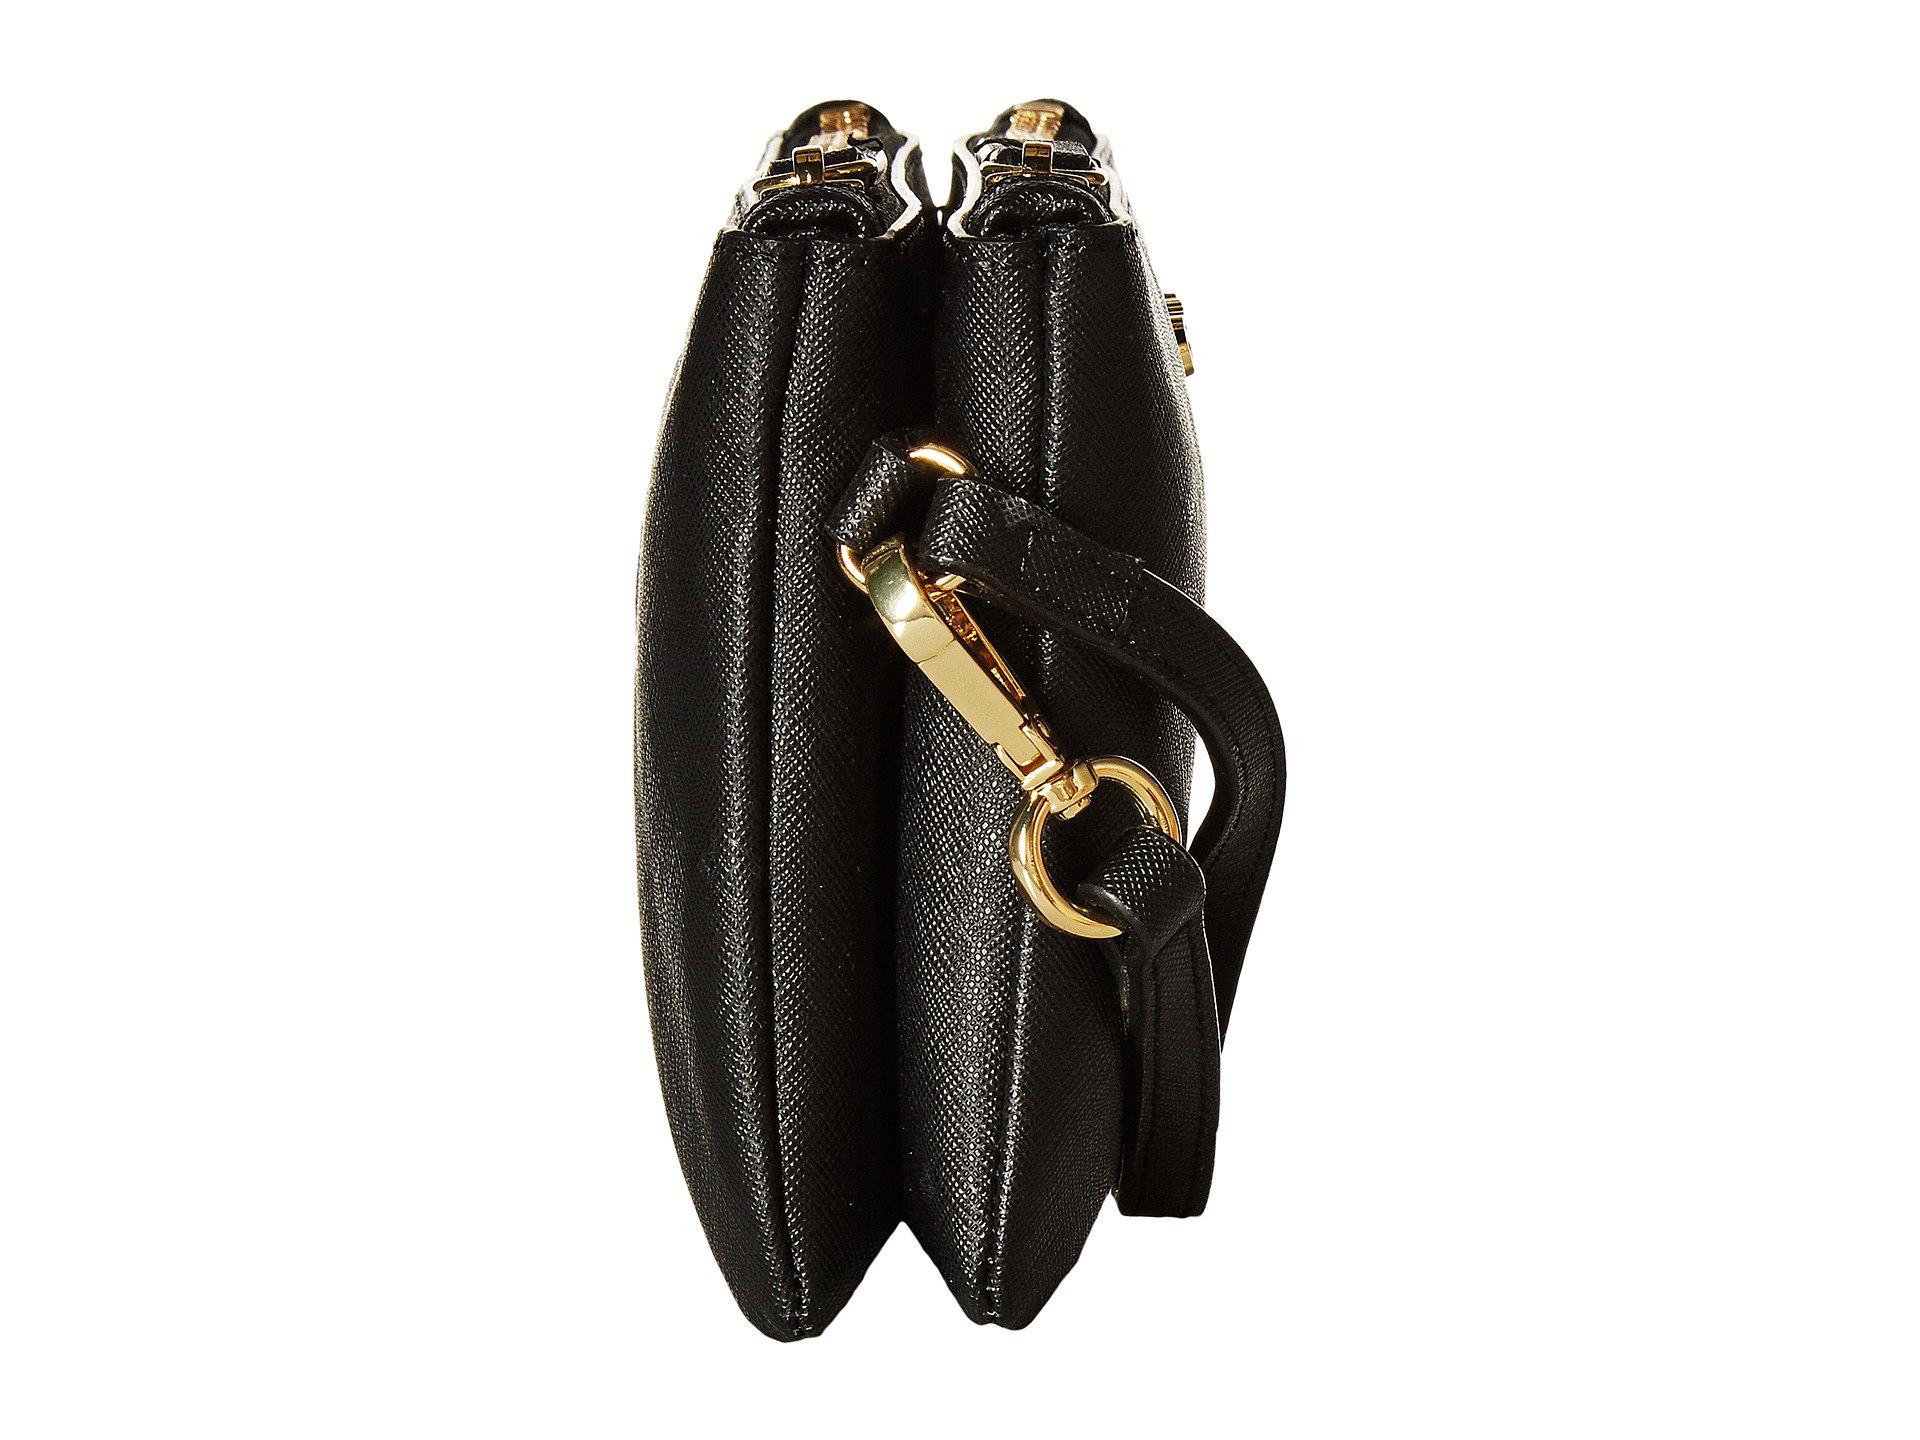 Lyst - Calvin Klein Saffiano Wristlet (black/gold) Wristlet Handbags in Black